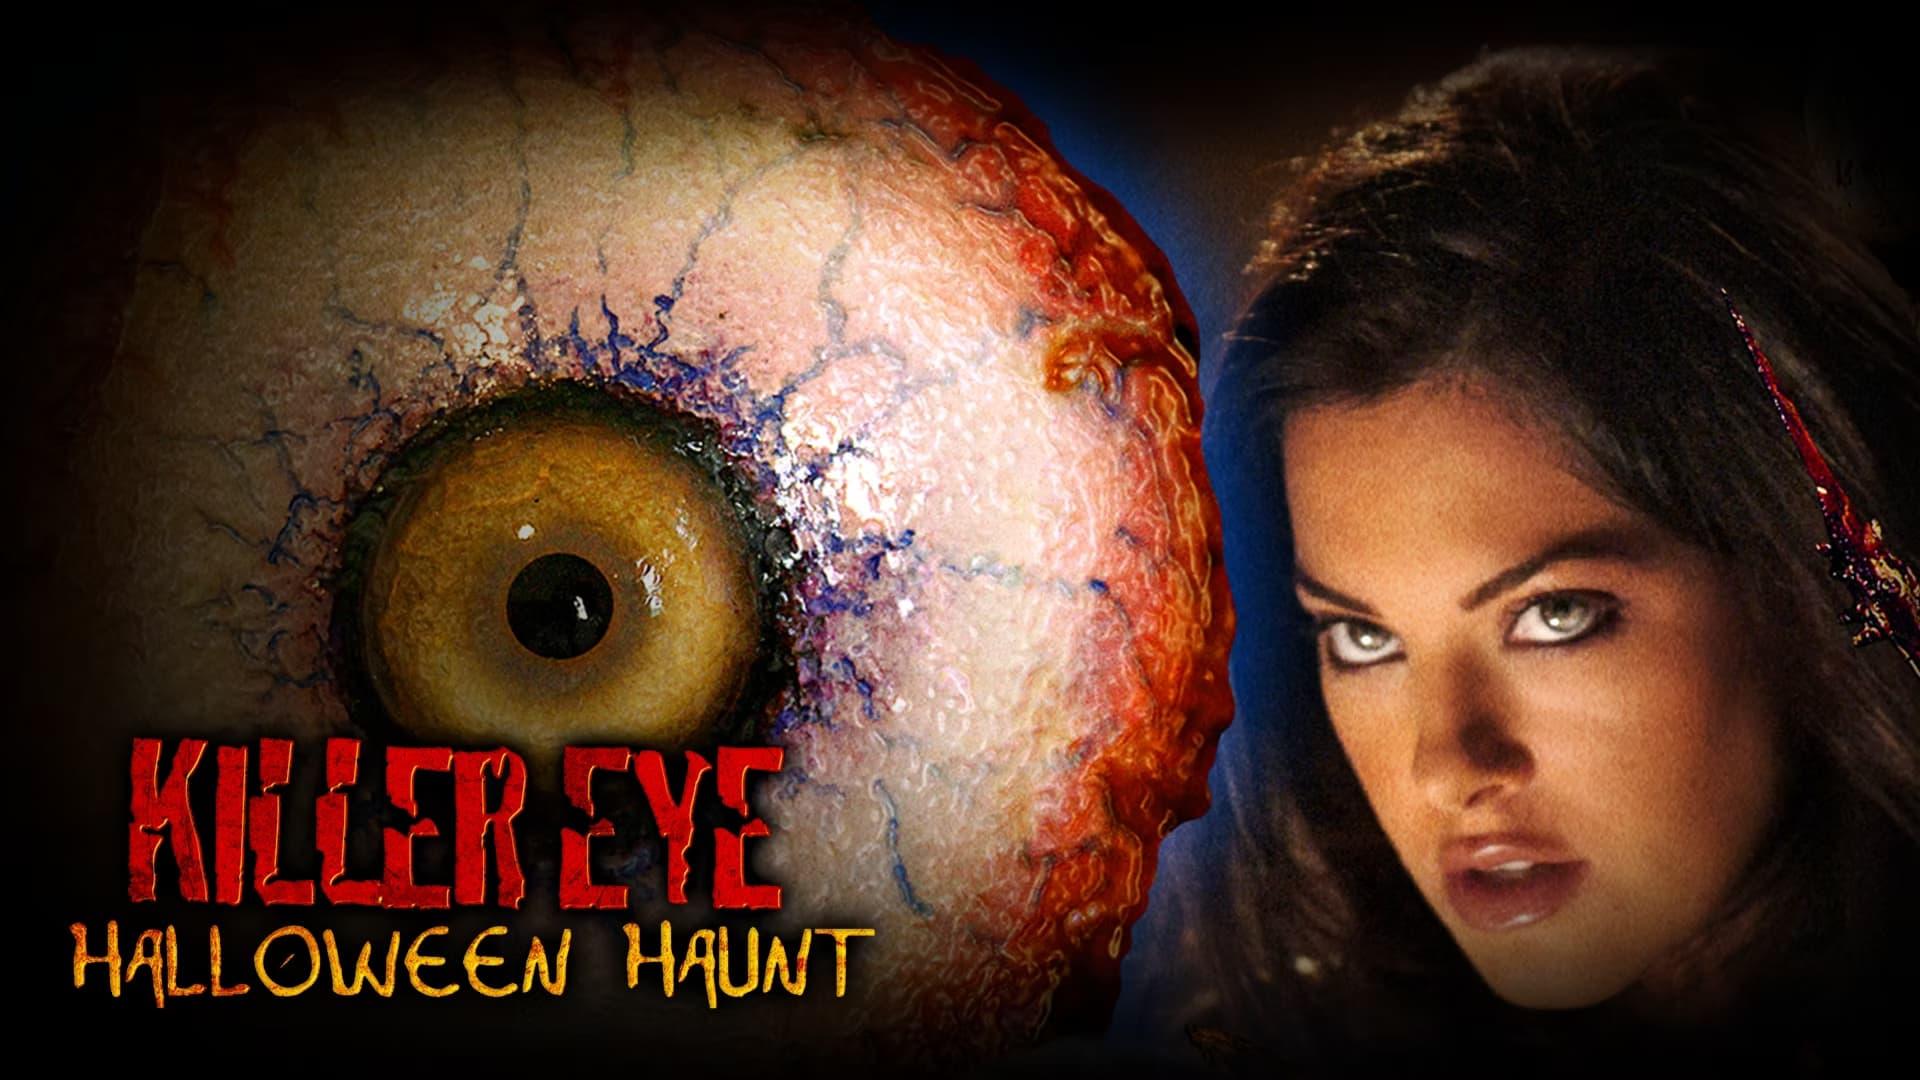 Killer Eye: Halloween Haunt backdrop